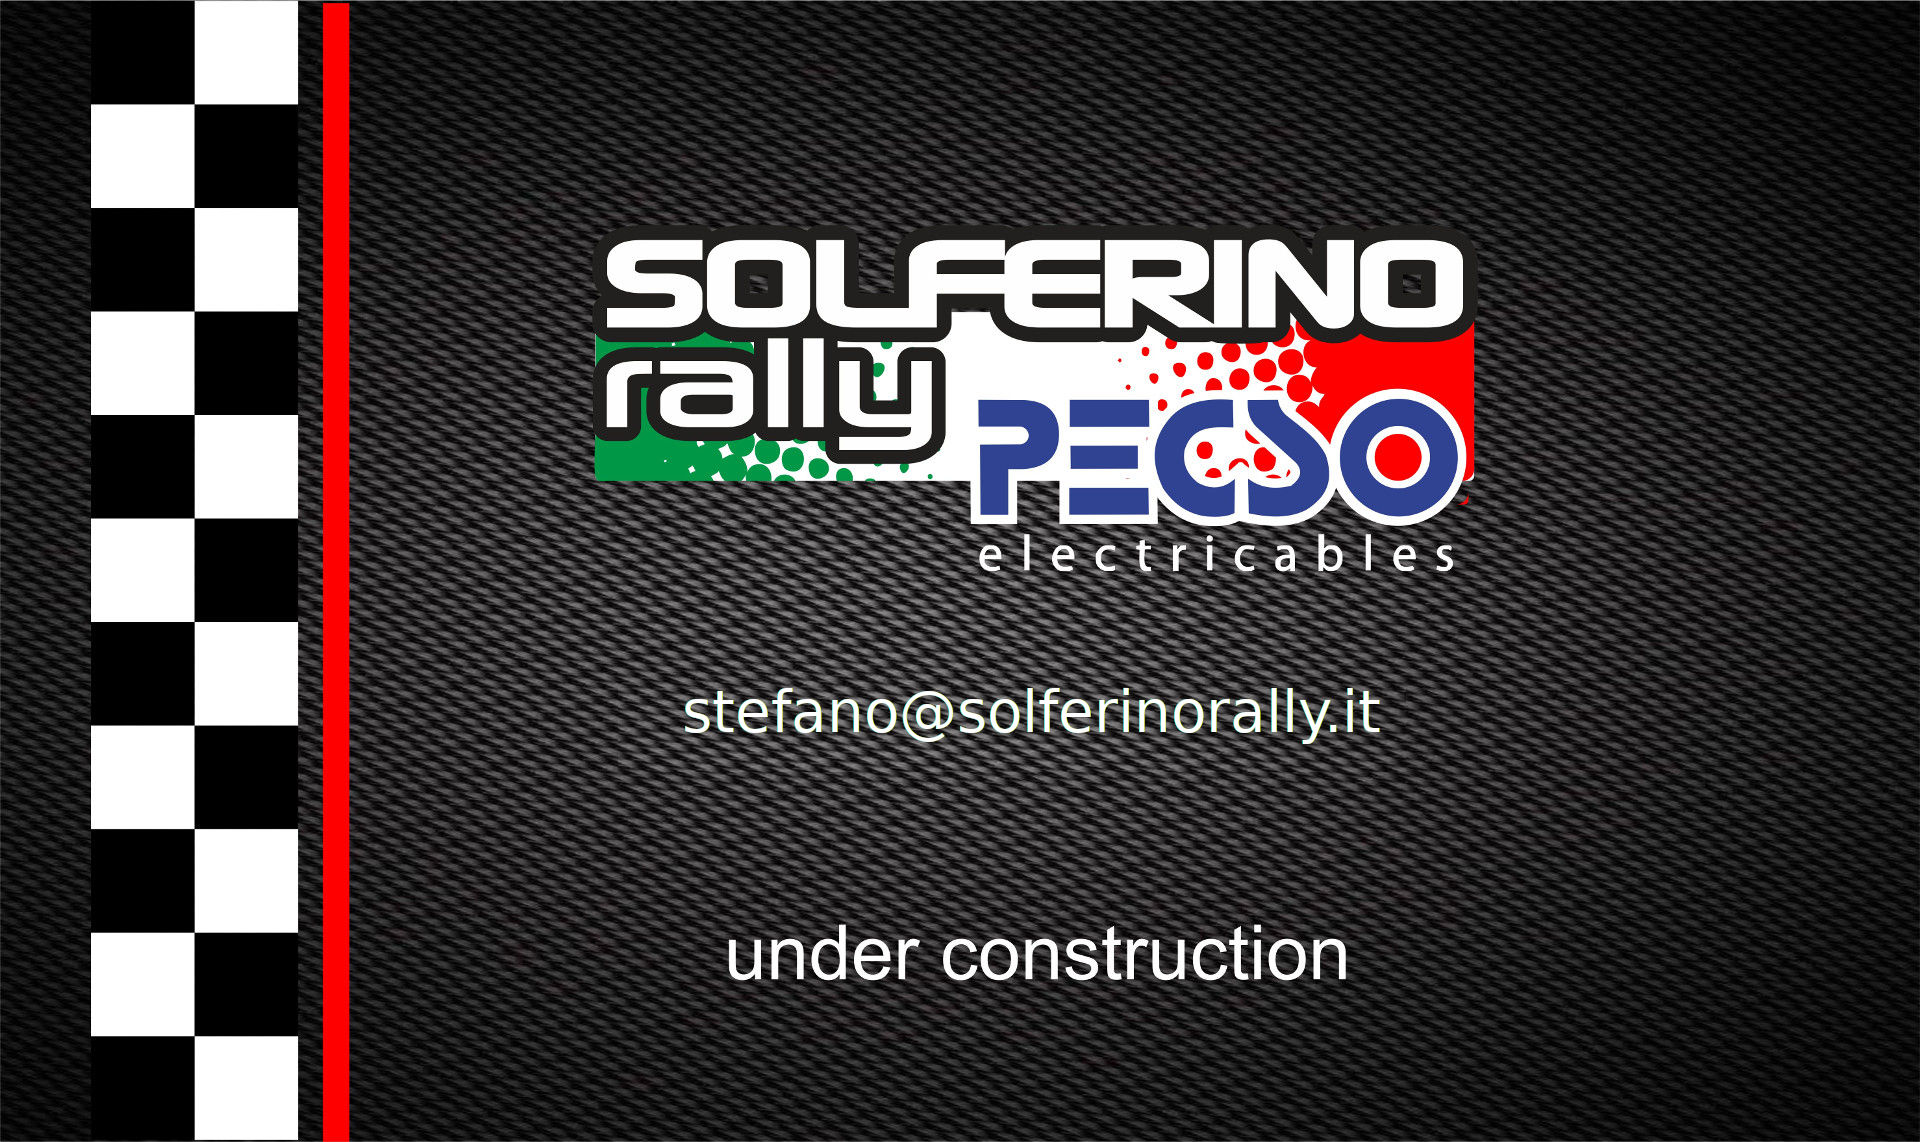 Solferino rally